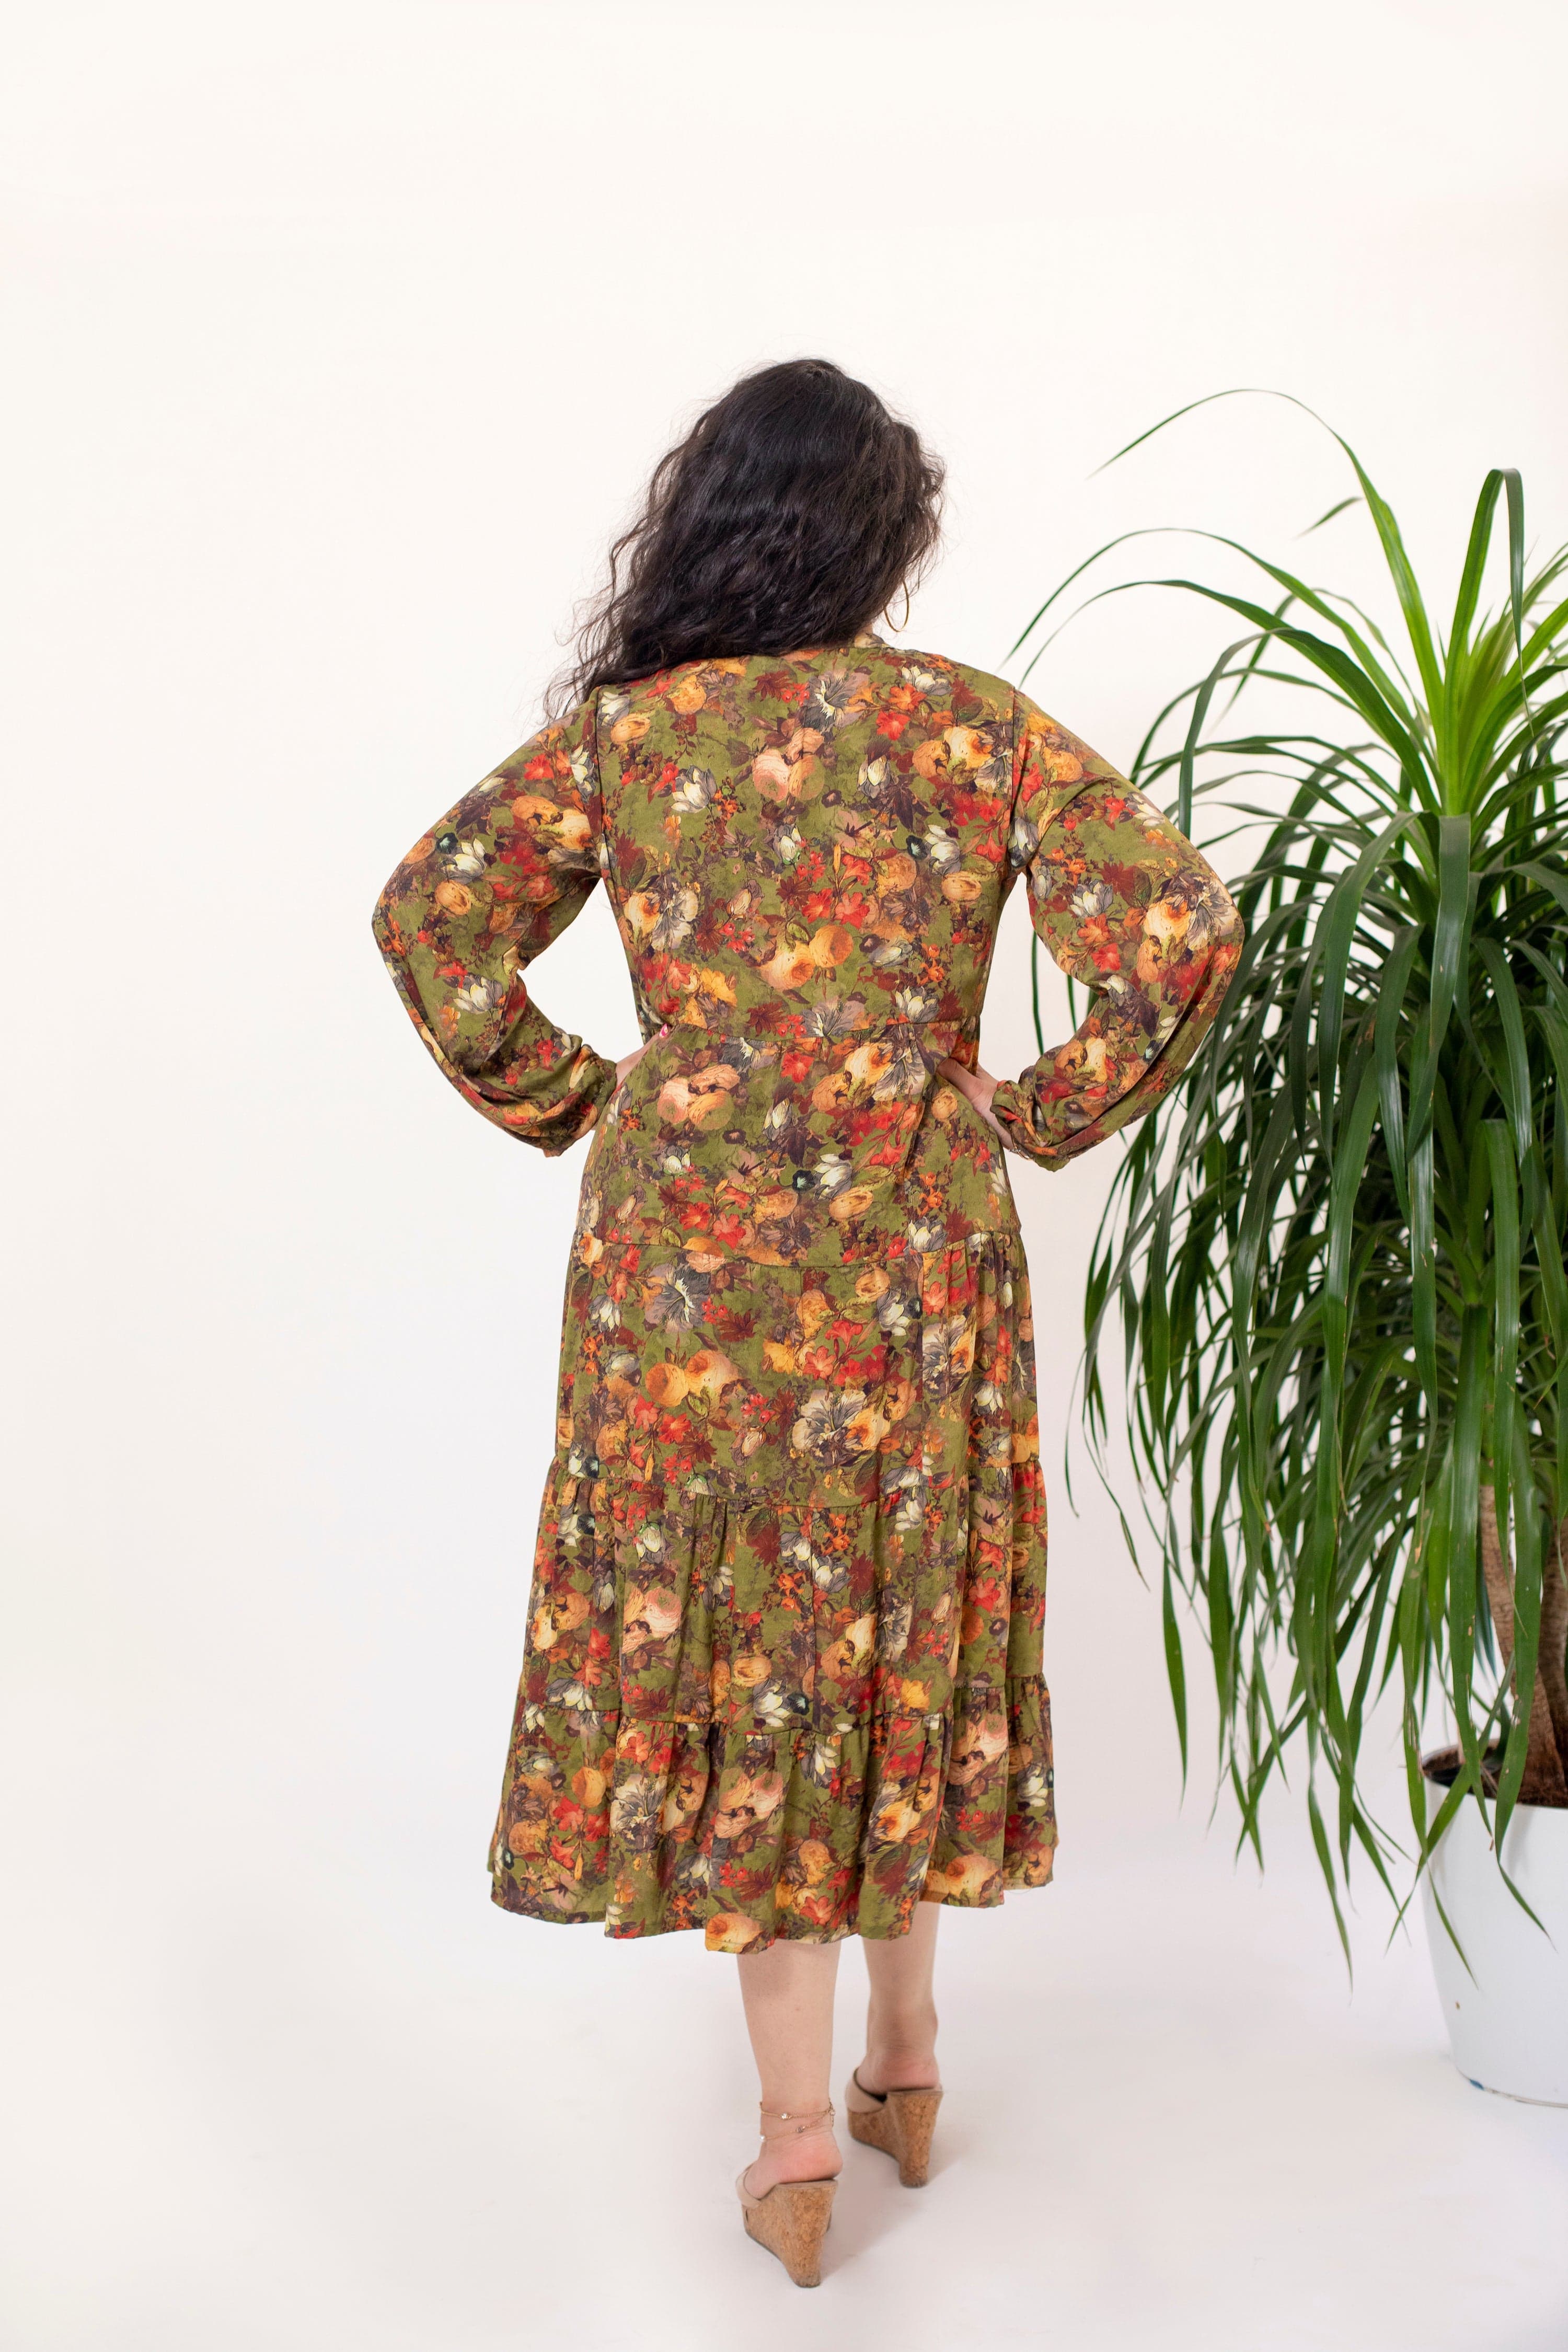 Olive Bloom Layered Dress ur - Jeeaayanu Fashion